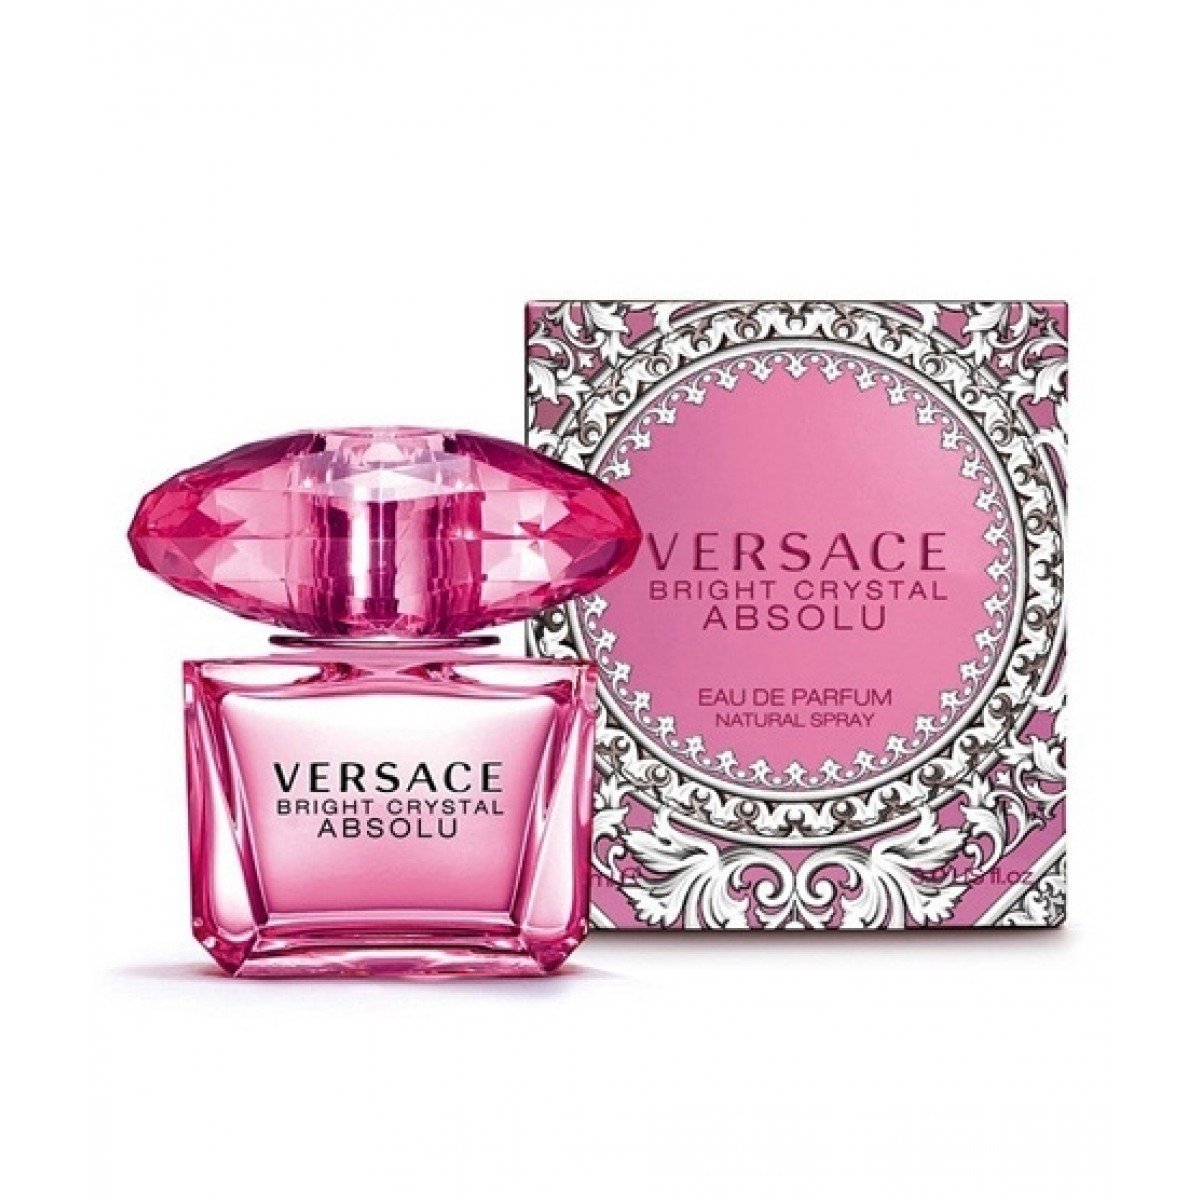 Versace Bright Crystal Absolu EDP - My Perfume Shop Australia